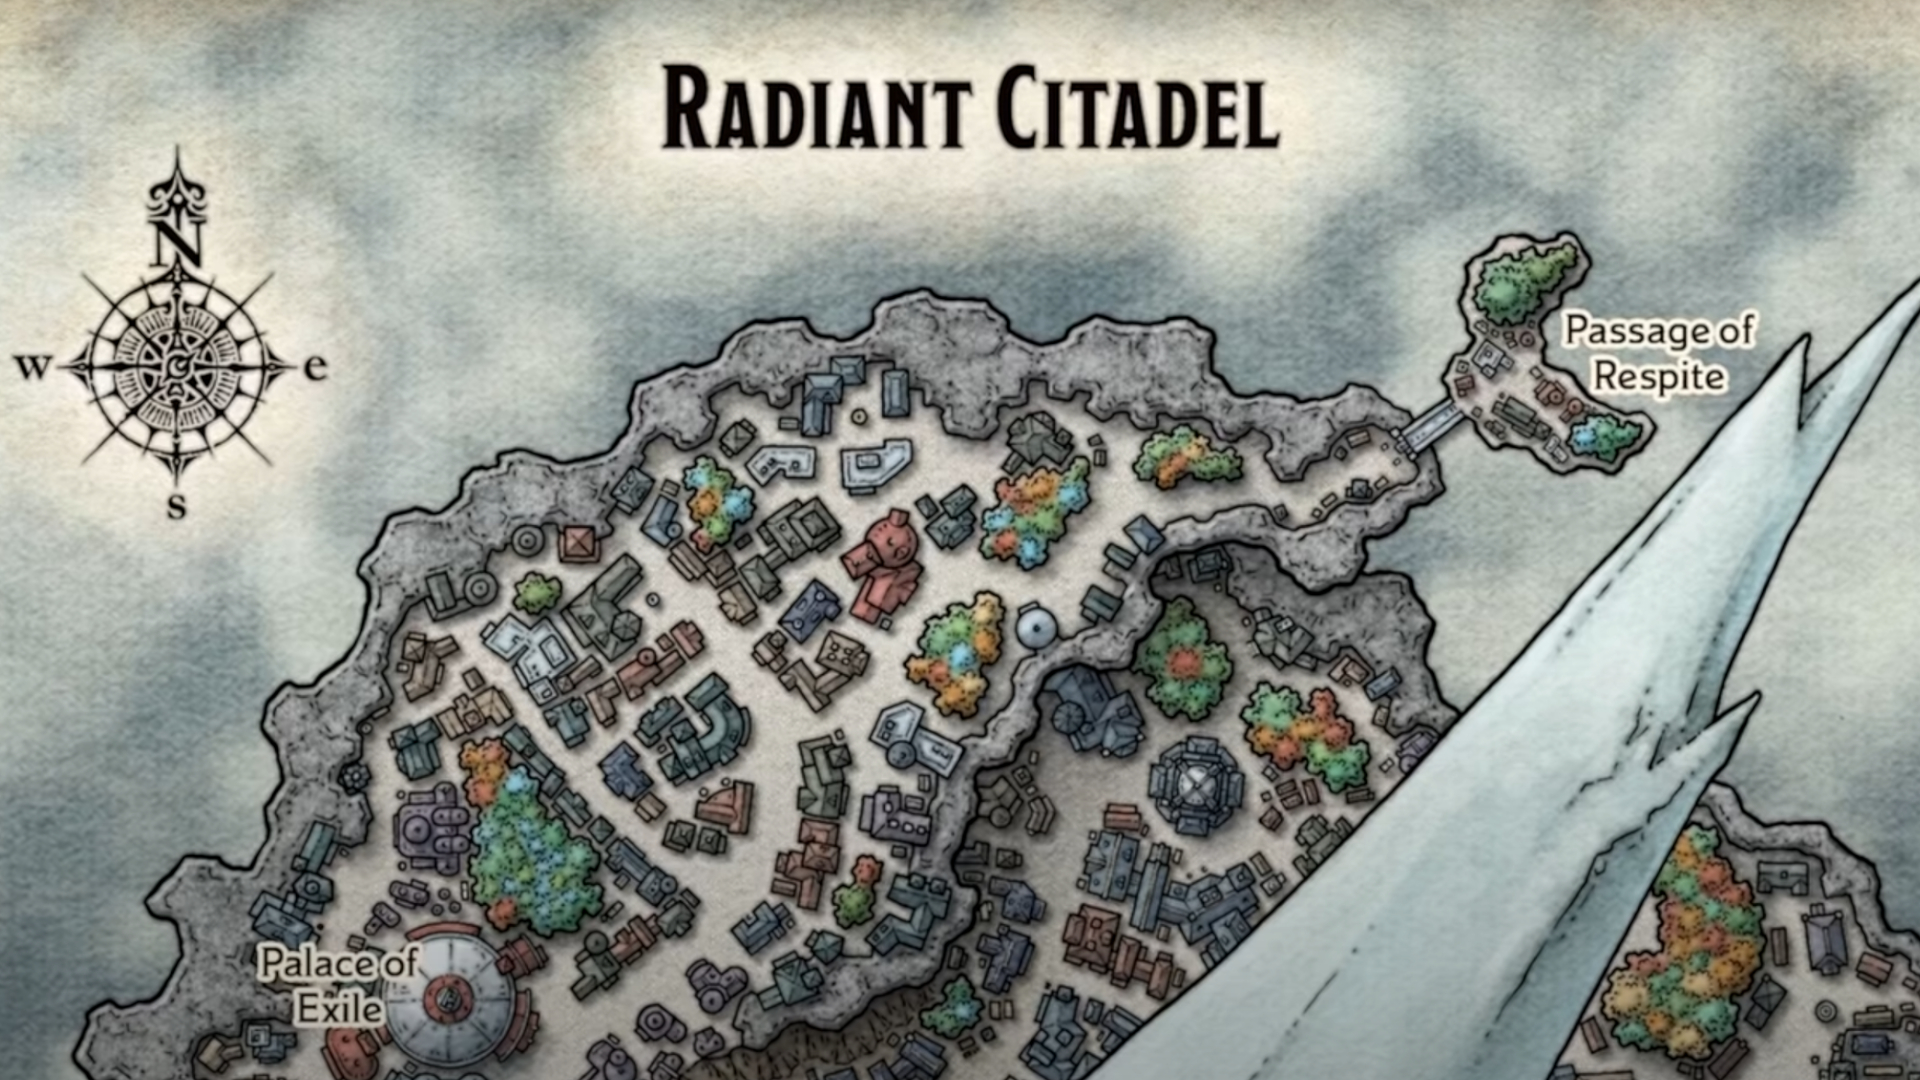 Journeys Through the Radiant Citadel